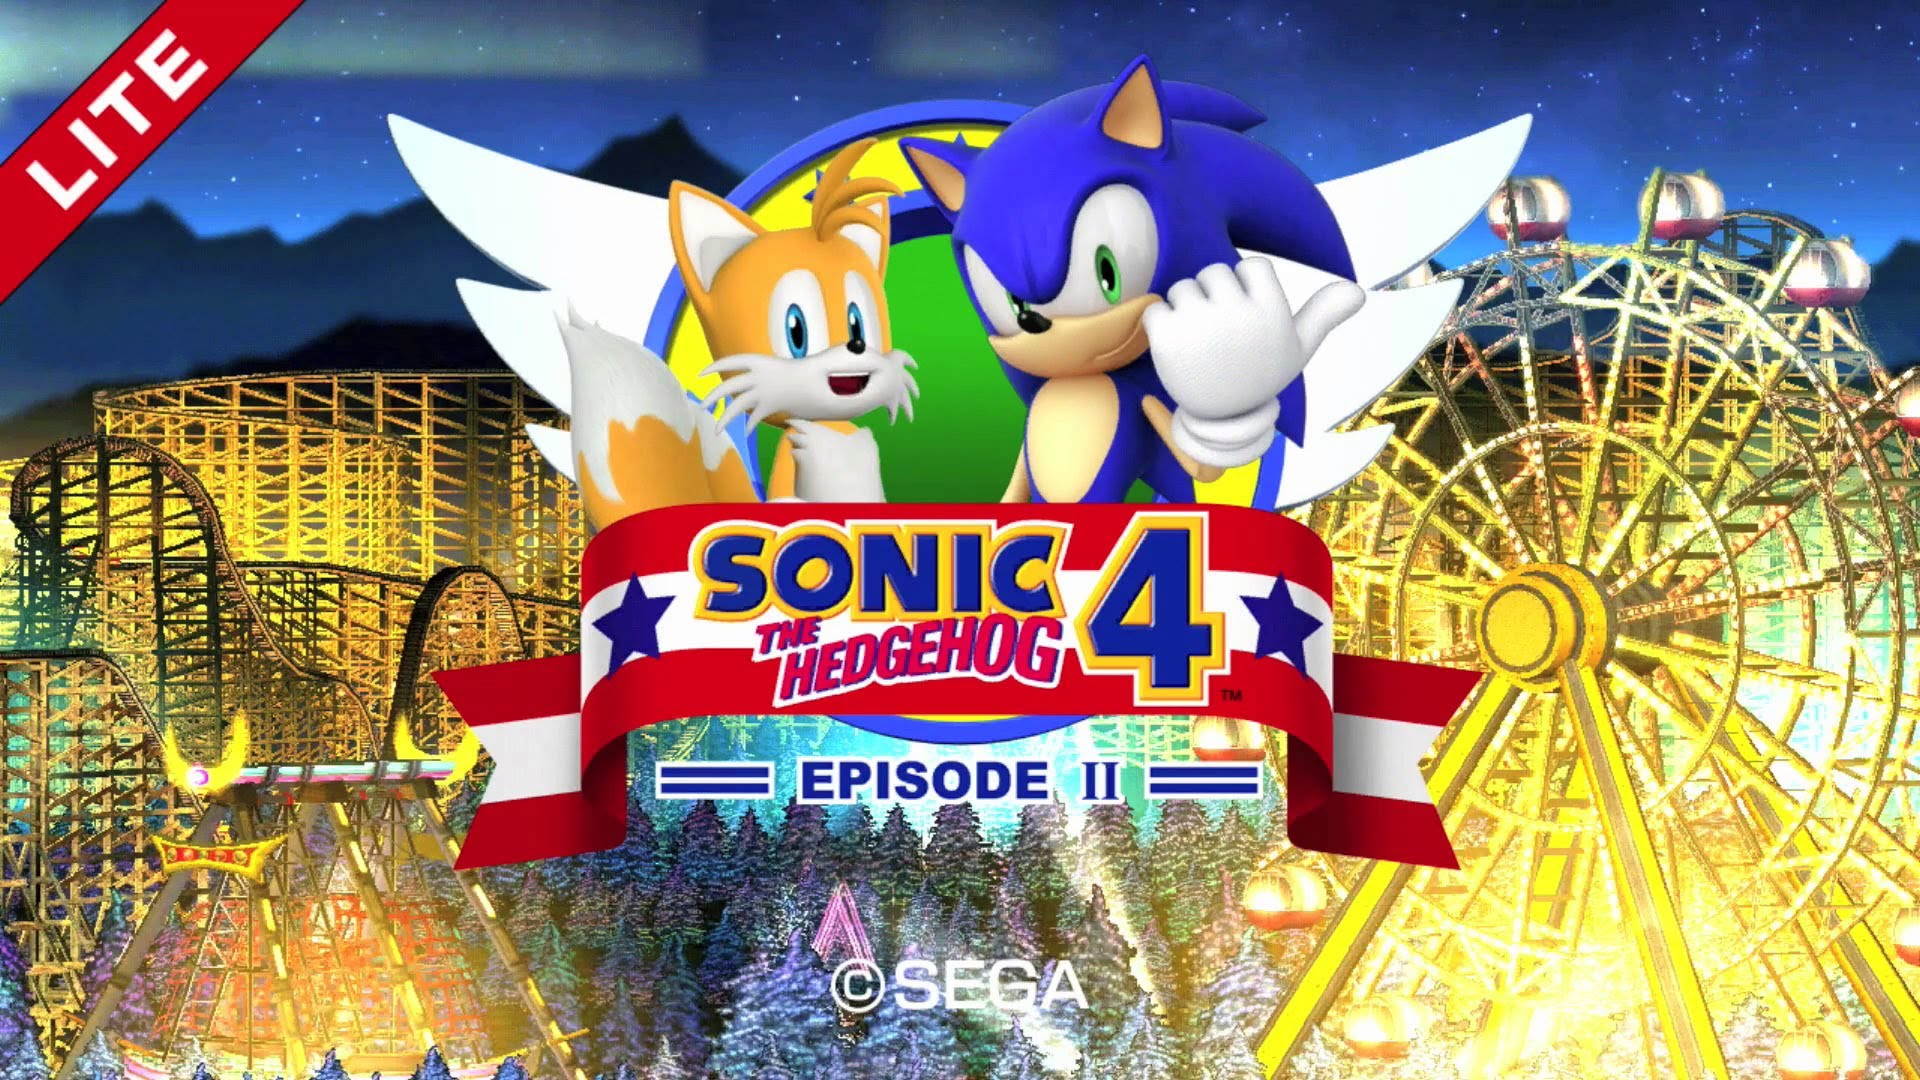 Sonic the hedgehog 4 2. Sonic the Hedgehog 4 Episode II обложка. Sonic the Hedgehog 4 Episode II (2012). Sonic the Hedgehog 4 Episode II игра. Игра Sonic the Hedgehog 4.